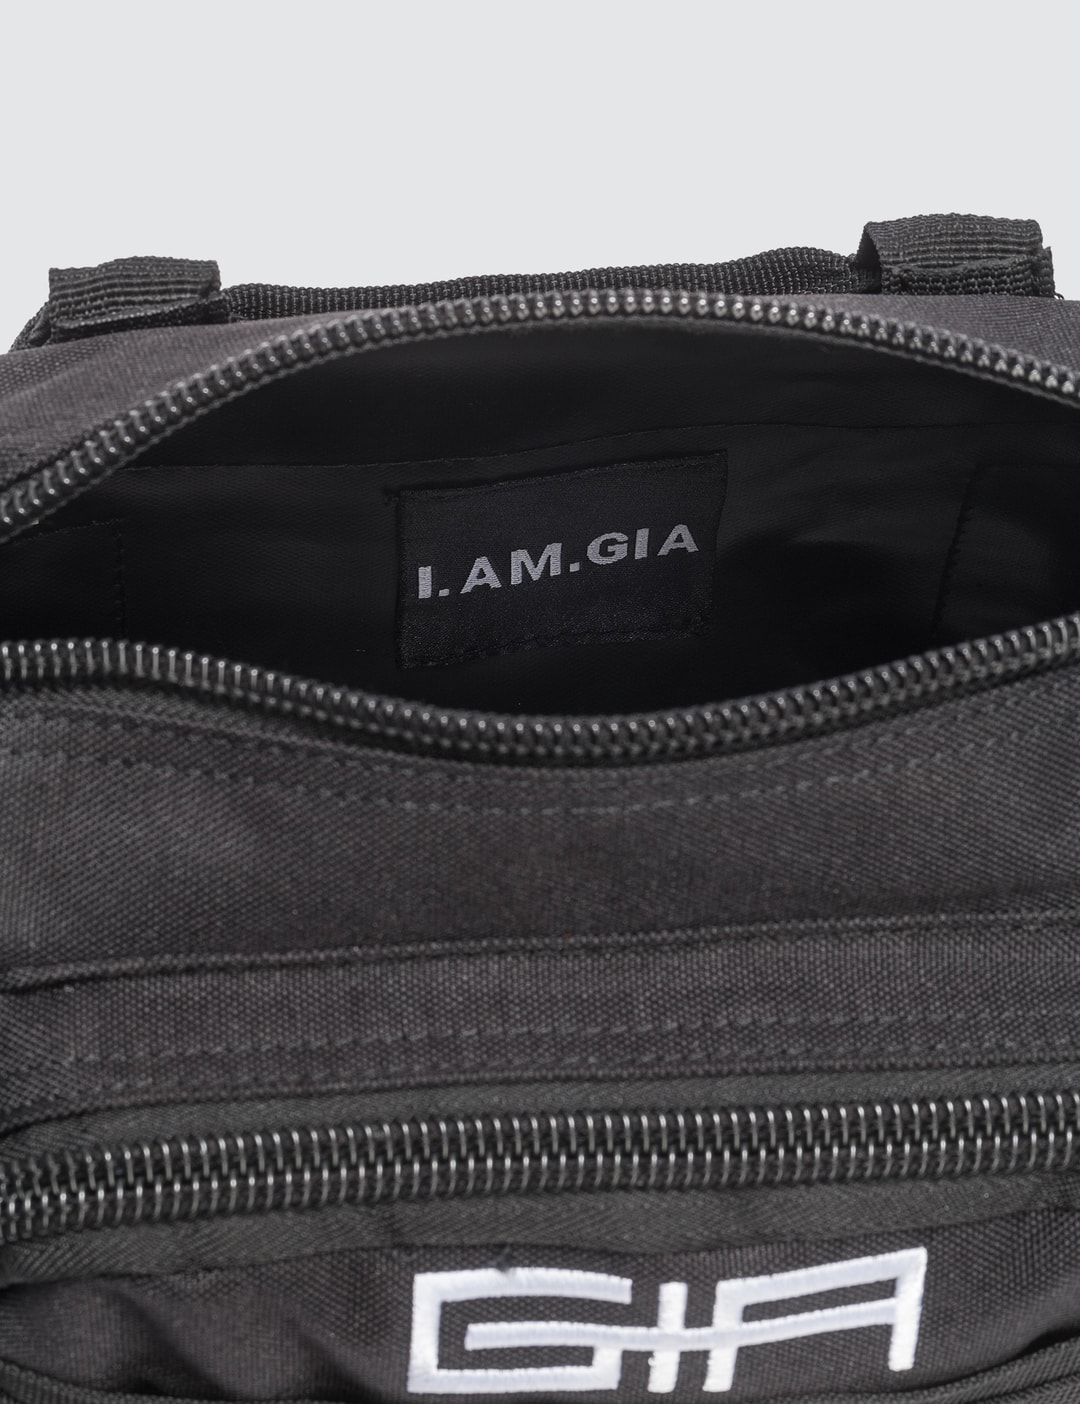 I.AM.GIA - Calypso Bag | HBX - Globally Curated Fashion and Lifestyle ...